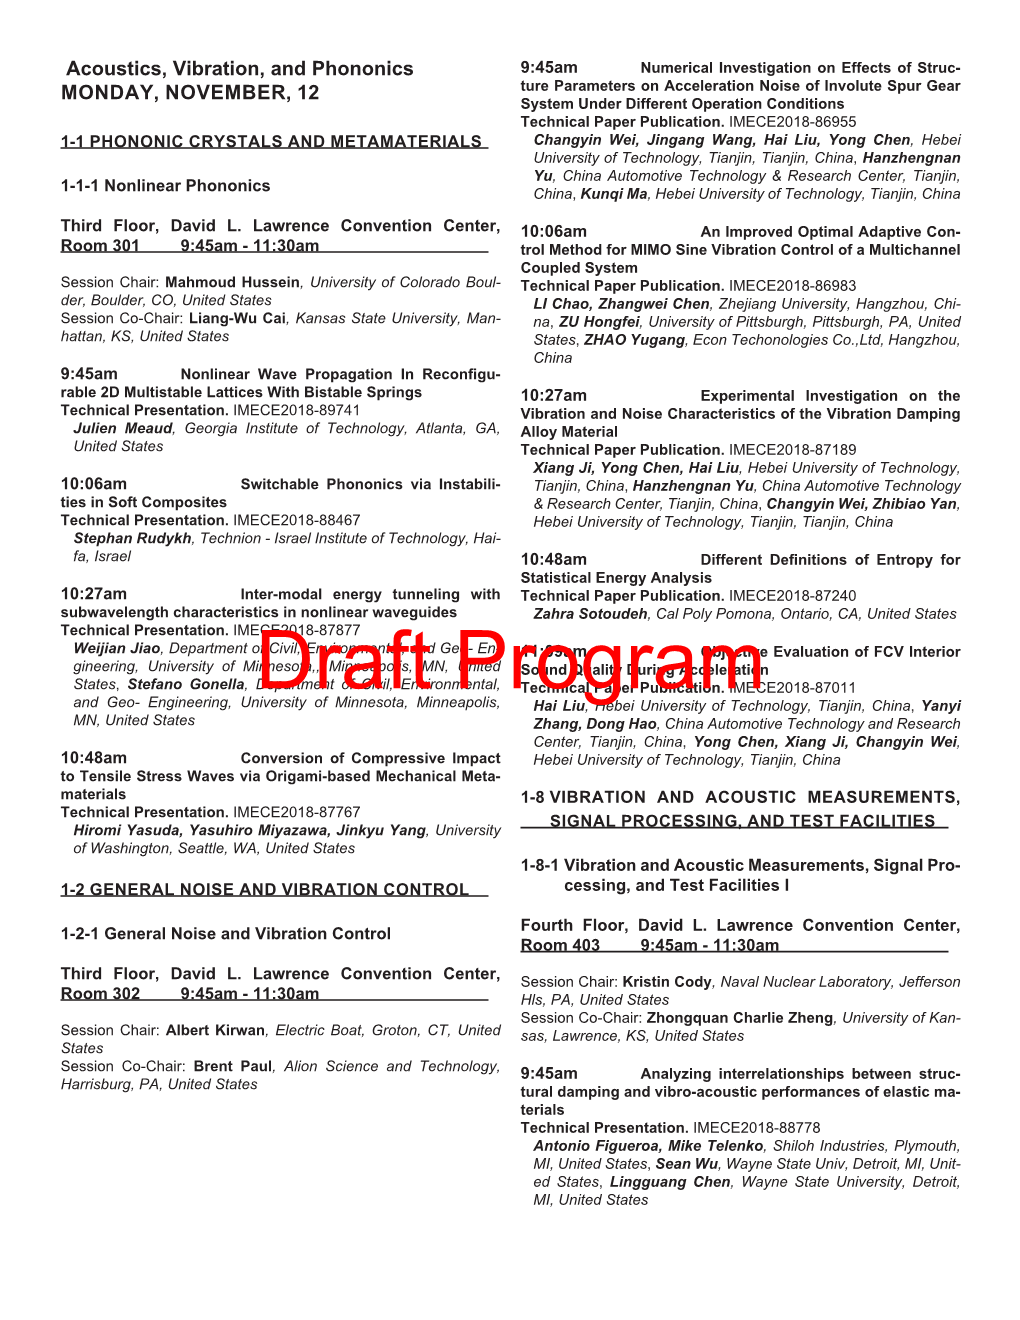 Draft Program